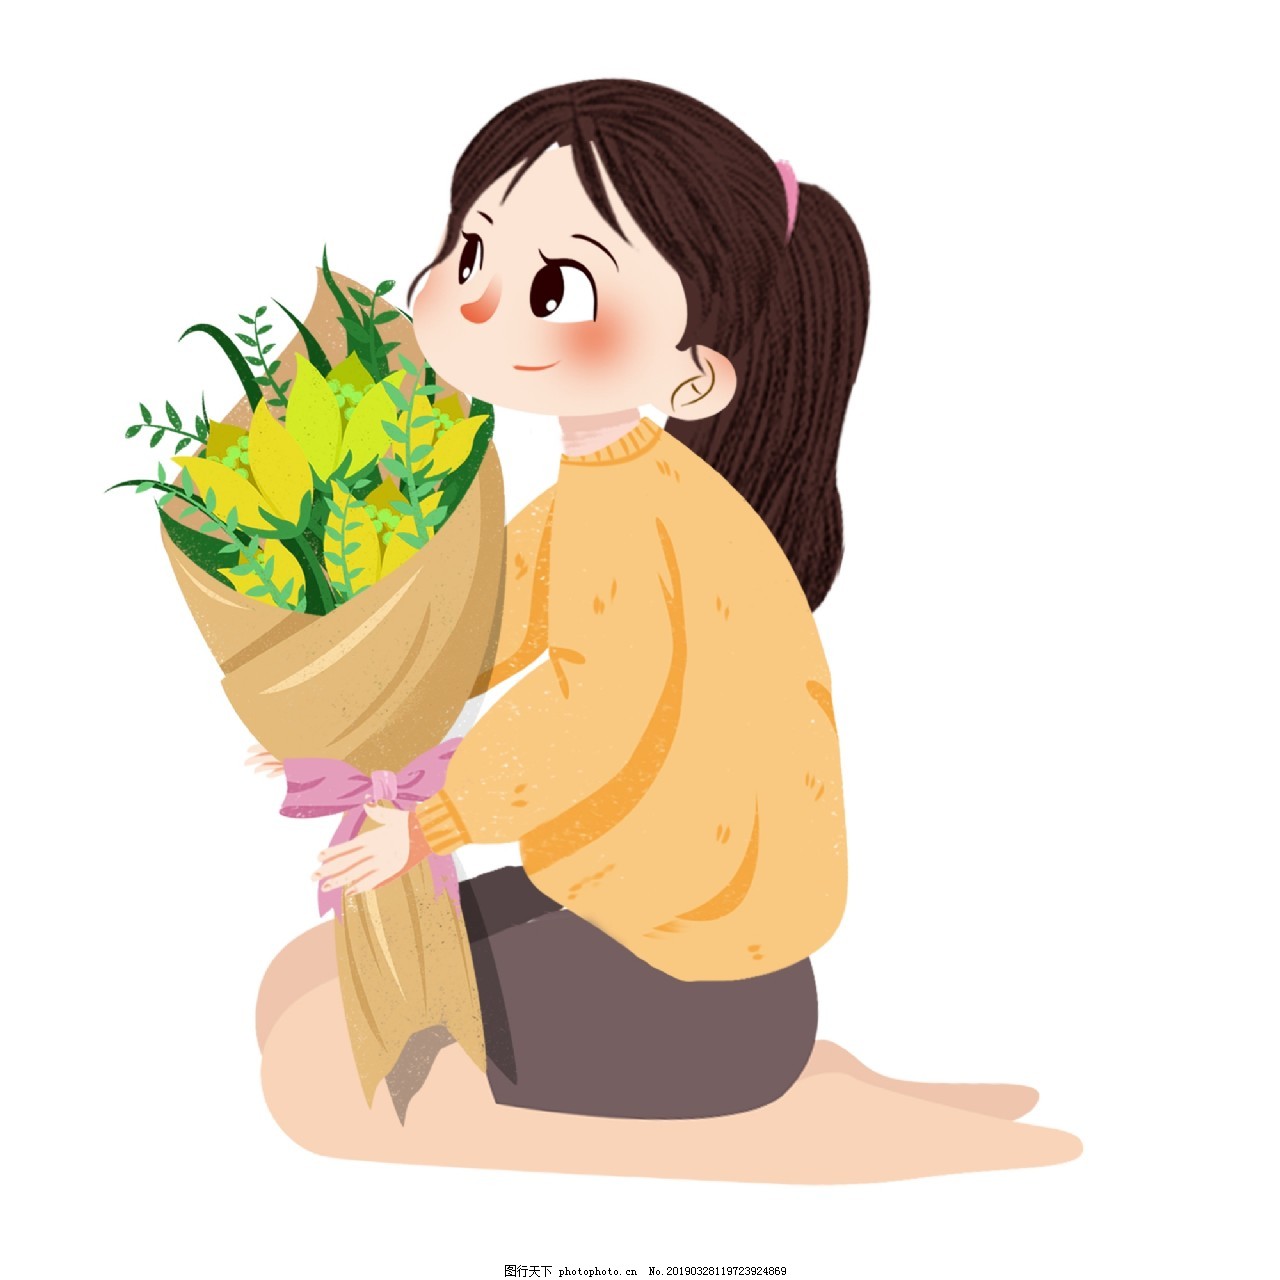 Stylish Girl Holding Flowers Free Clipart, Hand Stick Flower, Little ...